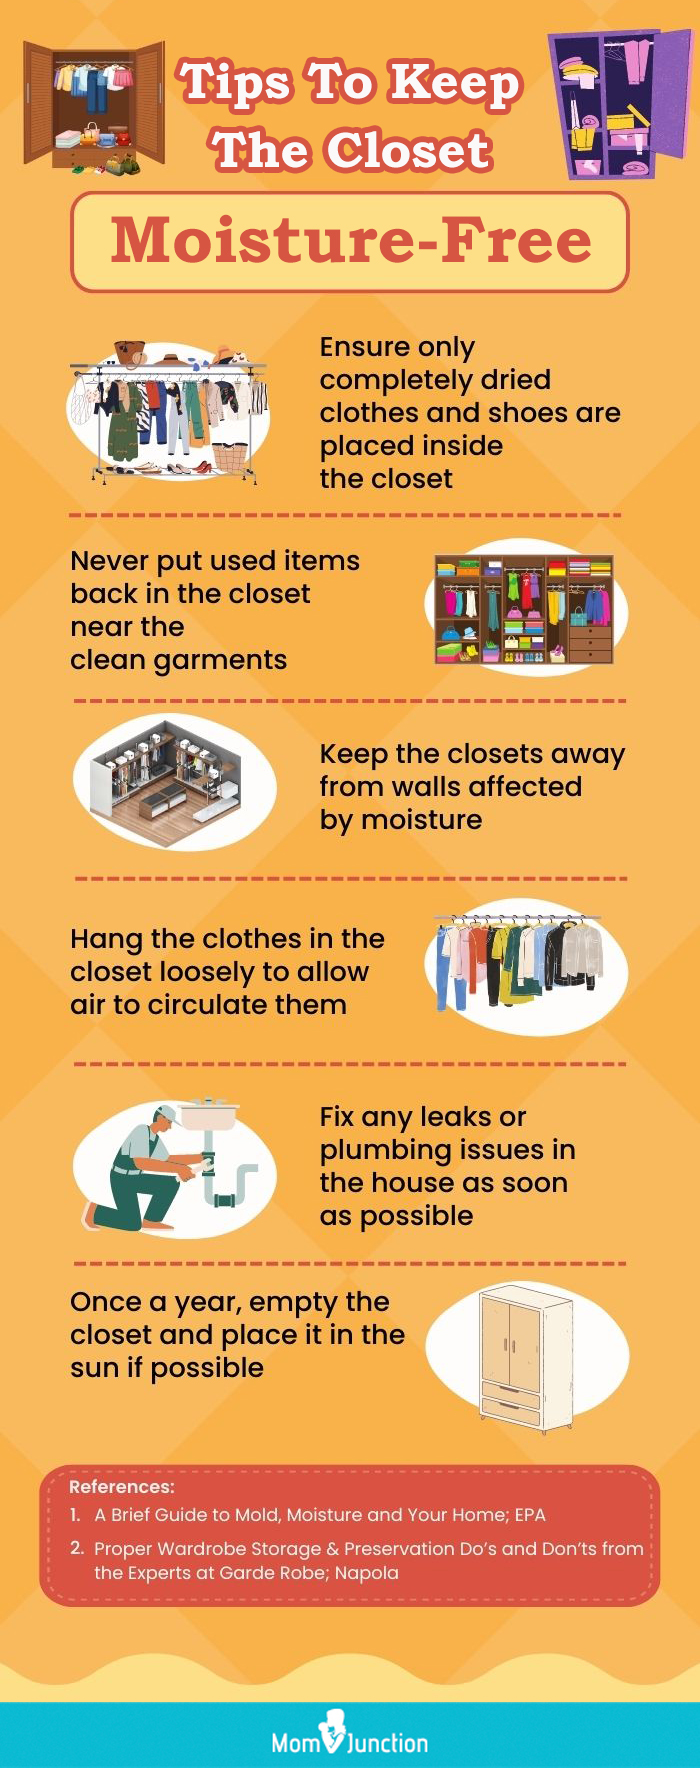 Tips To Keep The Closet Moisture-Free